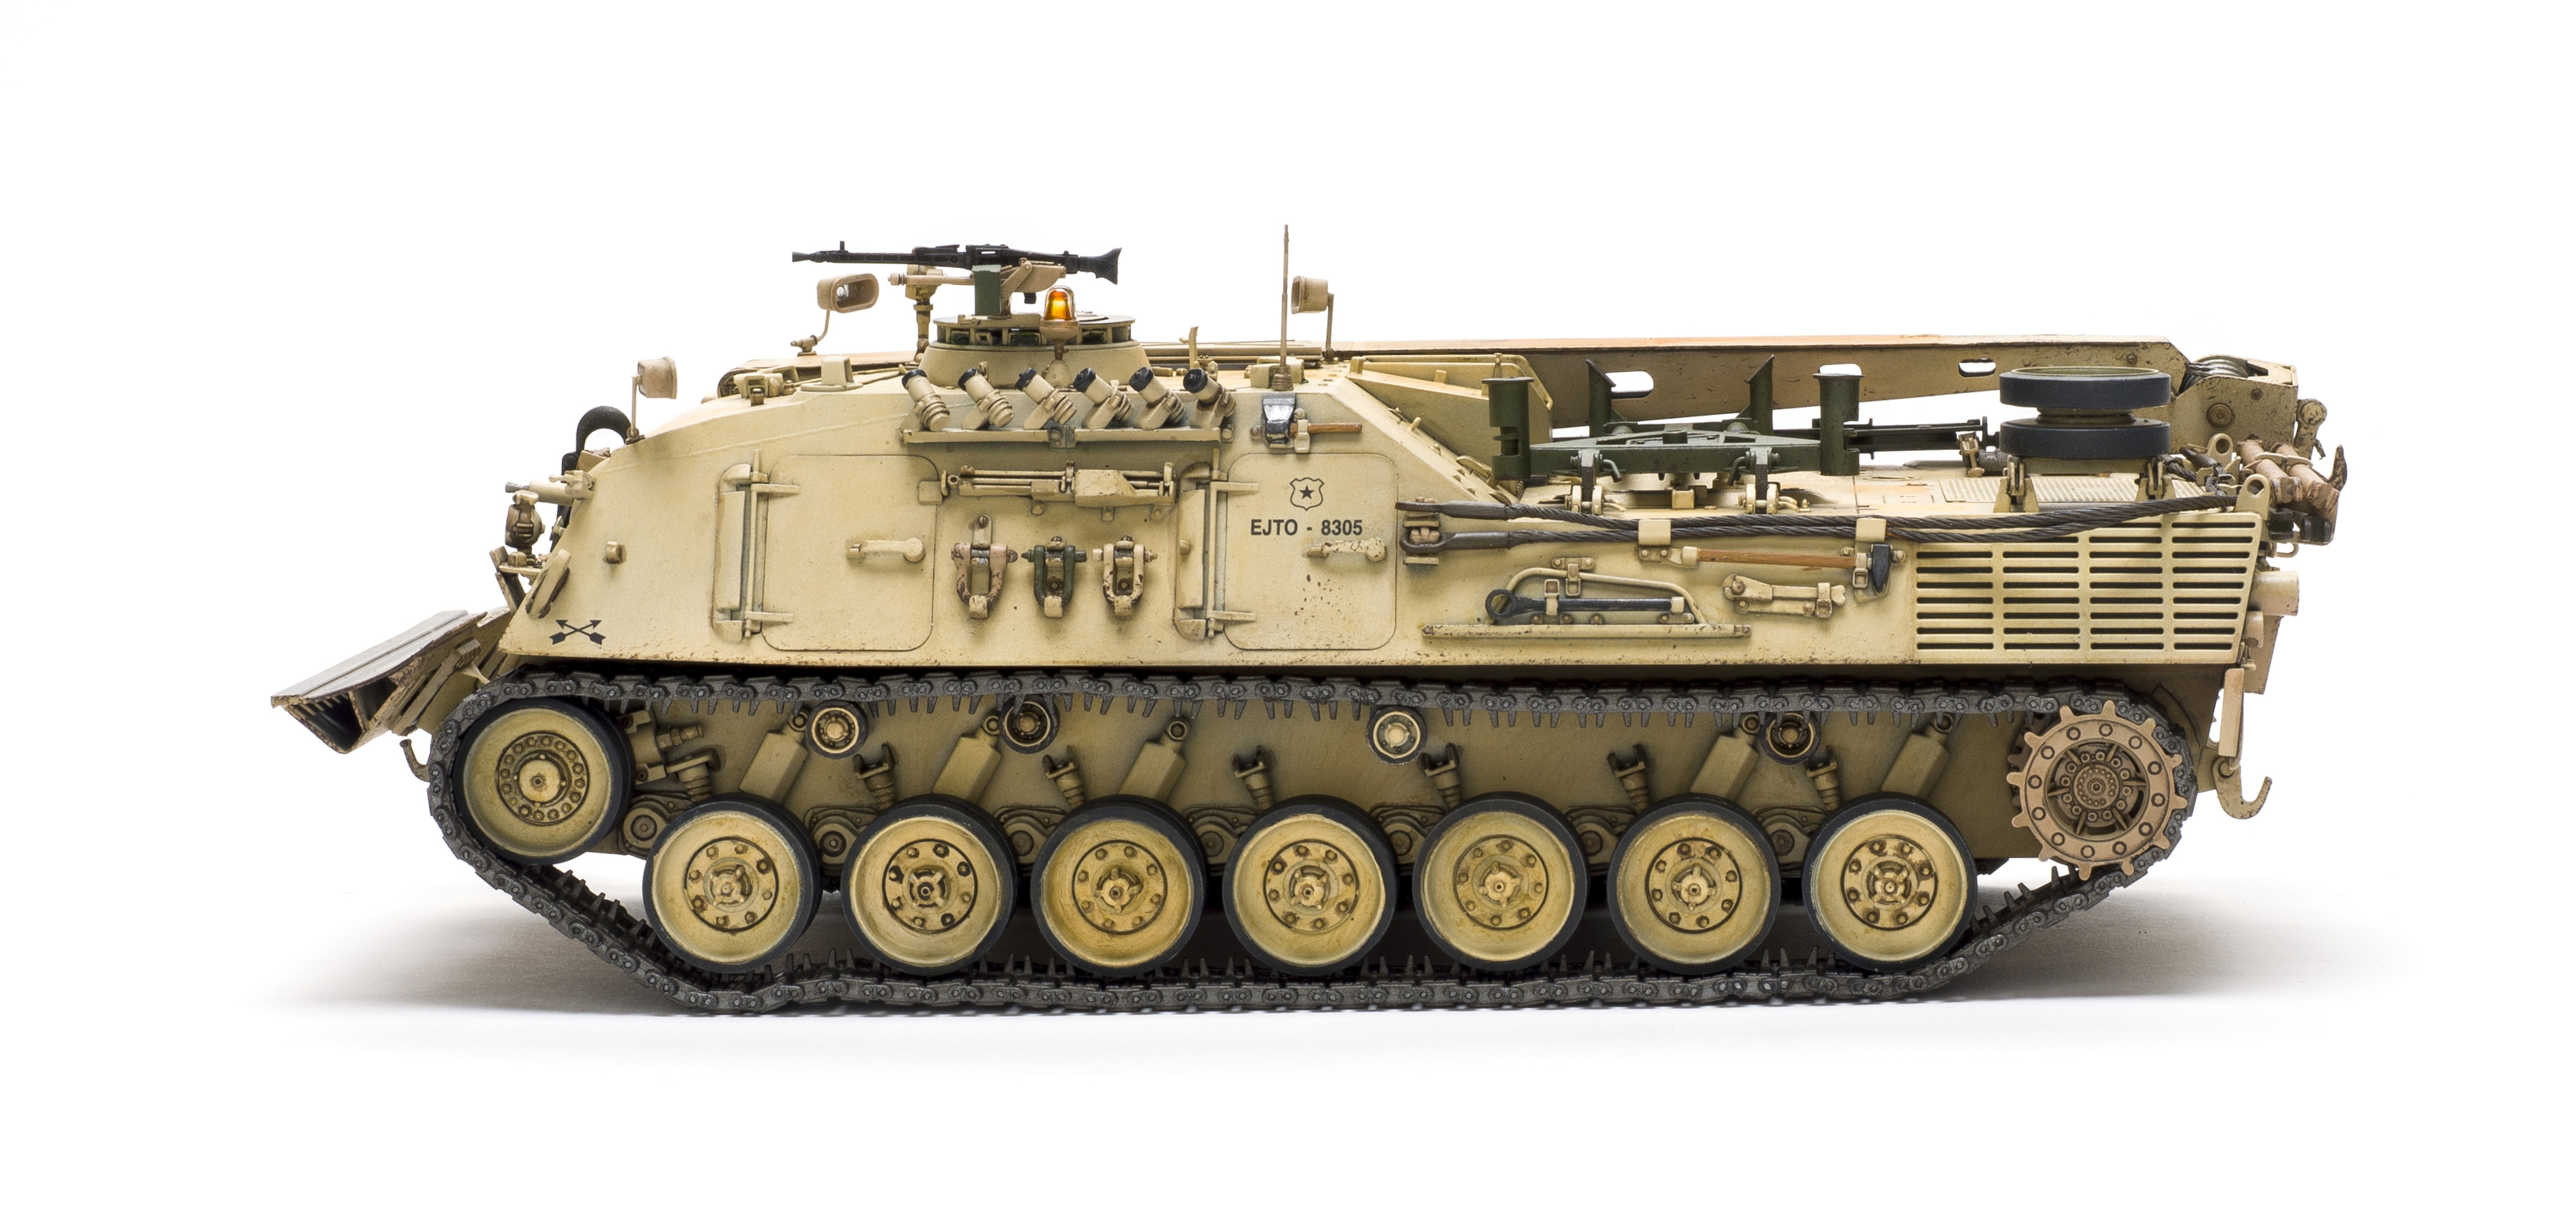 32 Leopard 1 A2 MILITARY VEHICLE 1:72 SCALE ARMY DIECAST TANK PANZER GUN 